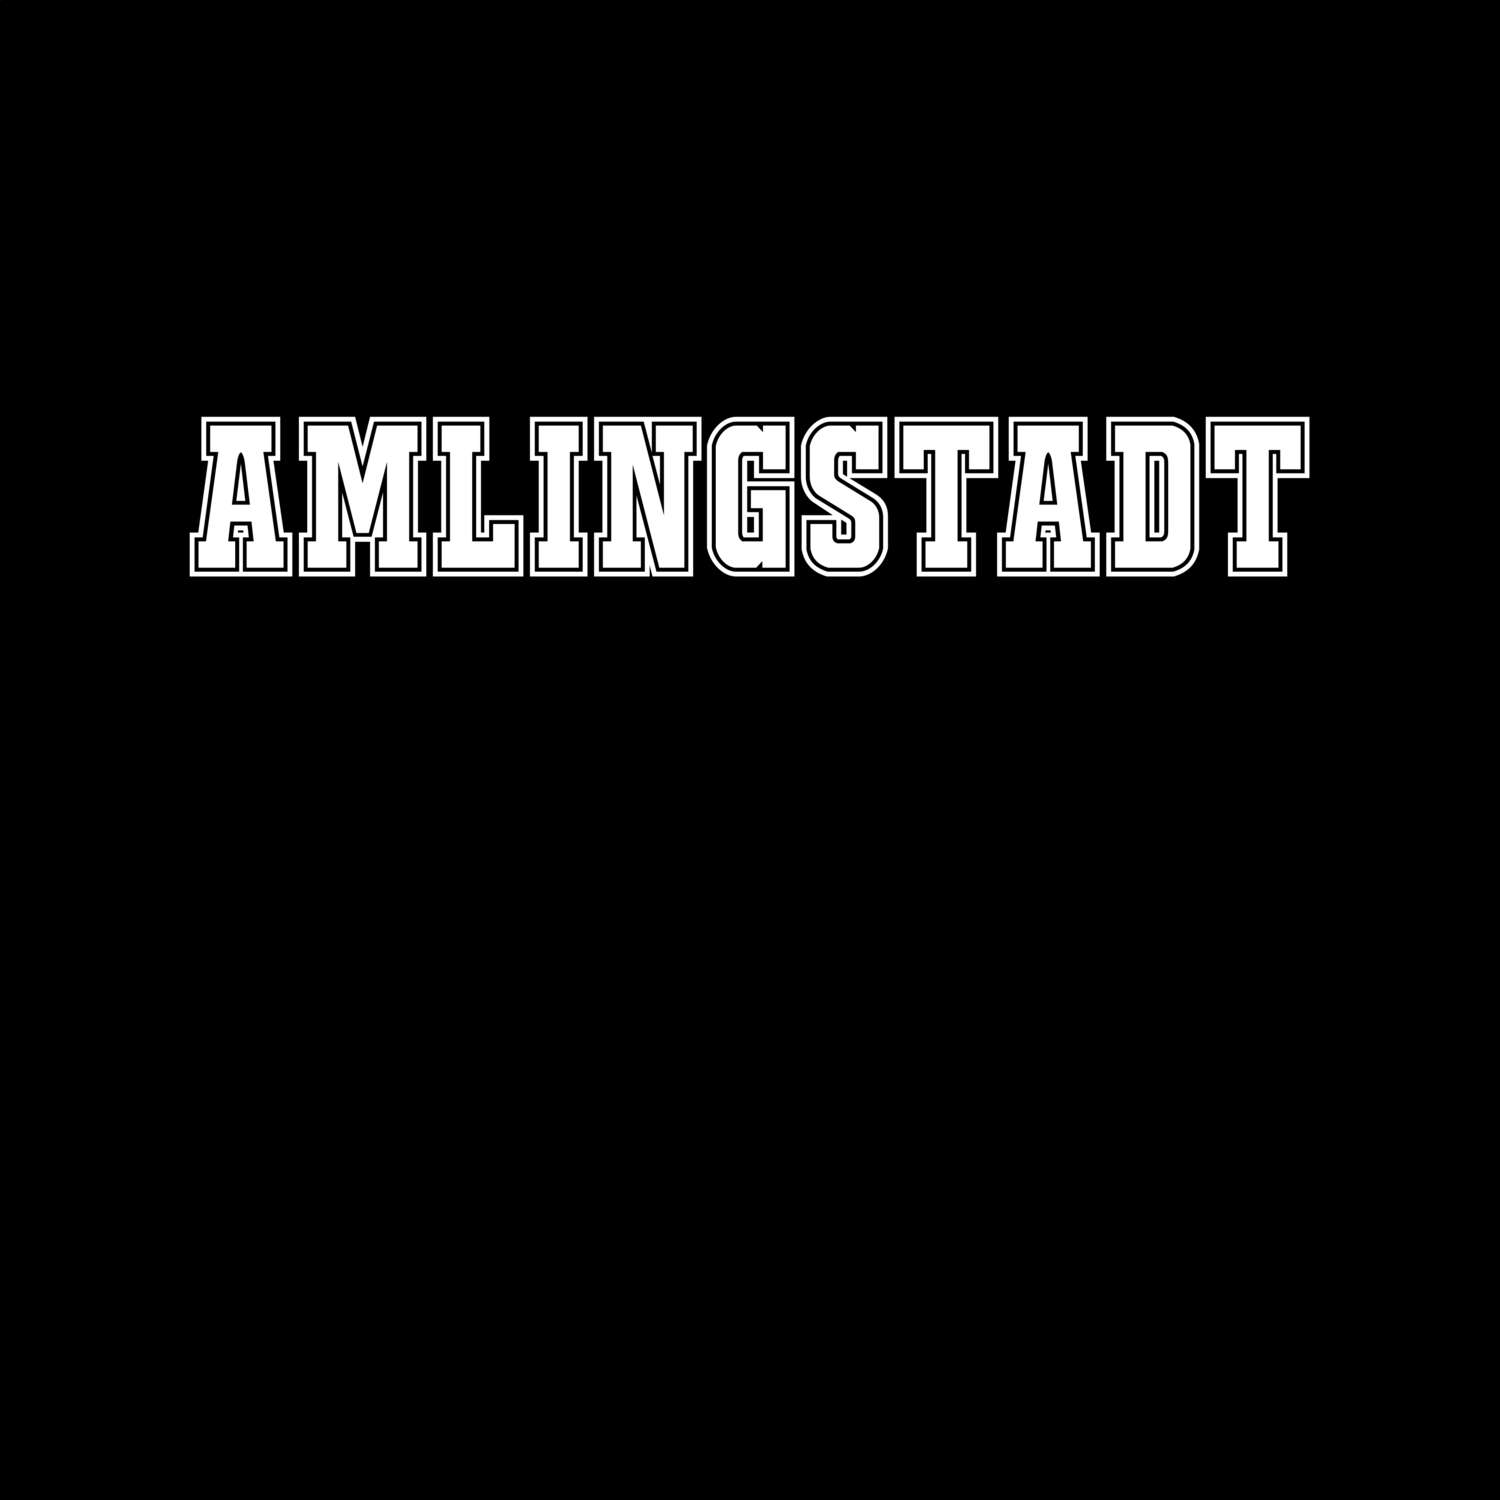 Amlingstadt T-Shirt »Classic«